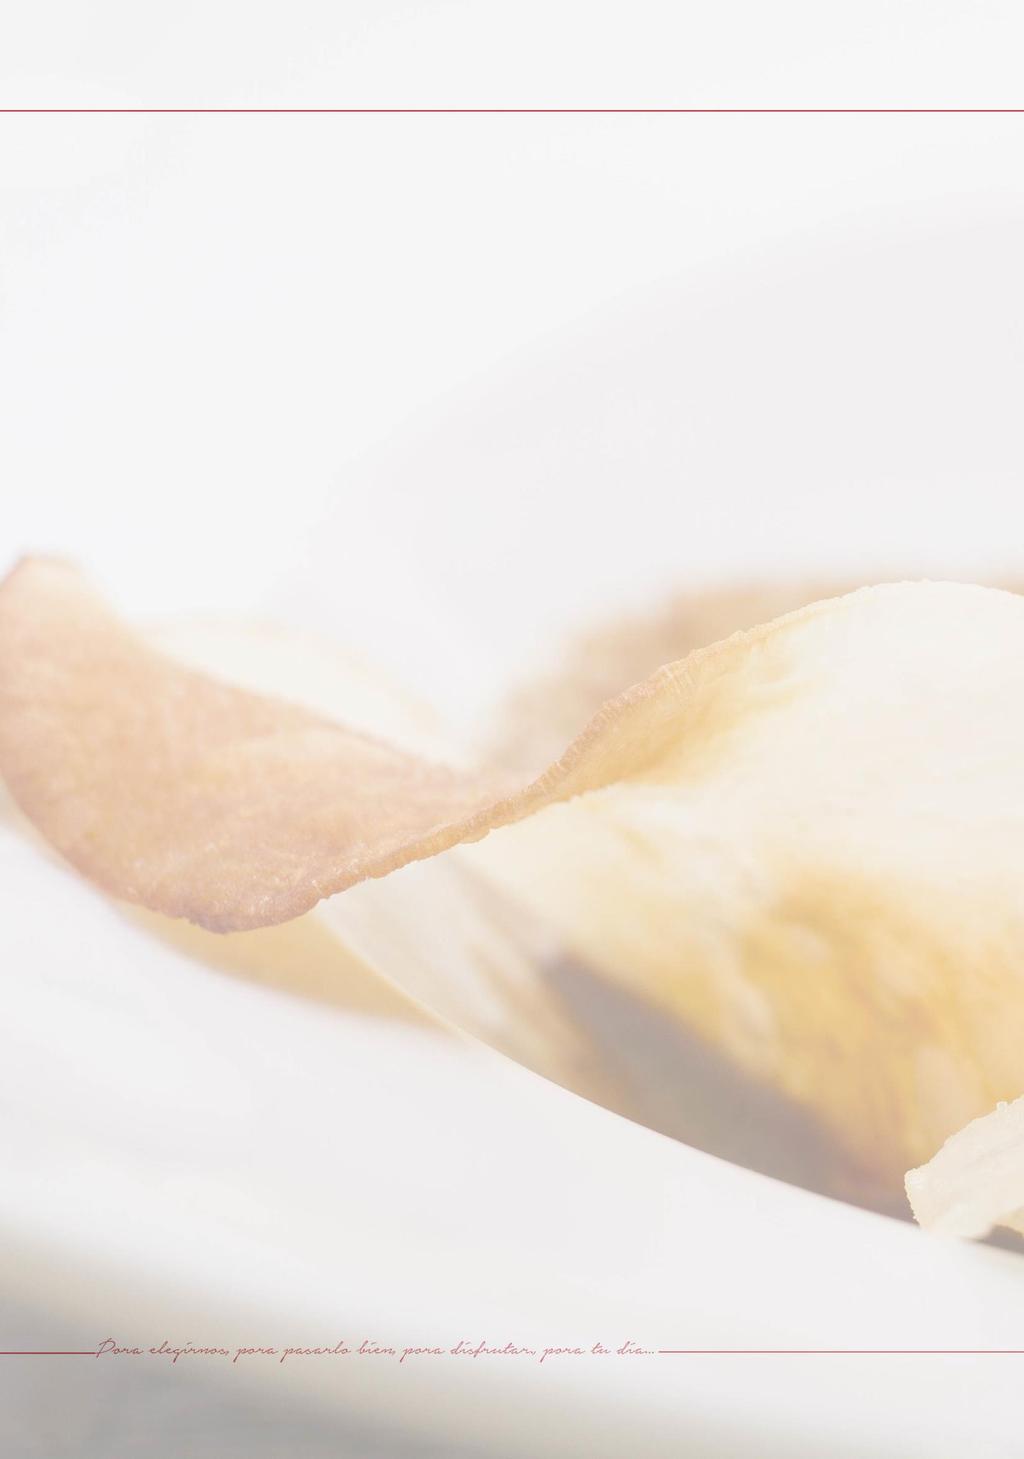 Cocktail de Gala EN FRÍO: Copita de Vermut con espuma de aceituna Chupito de gazpacho andaluz con polvo de ibérico Chupito de crema de melón Galia con polvo de ibérico Milhojas de salmón ahumado y